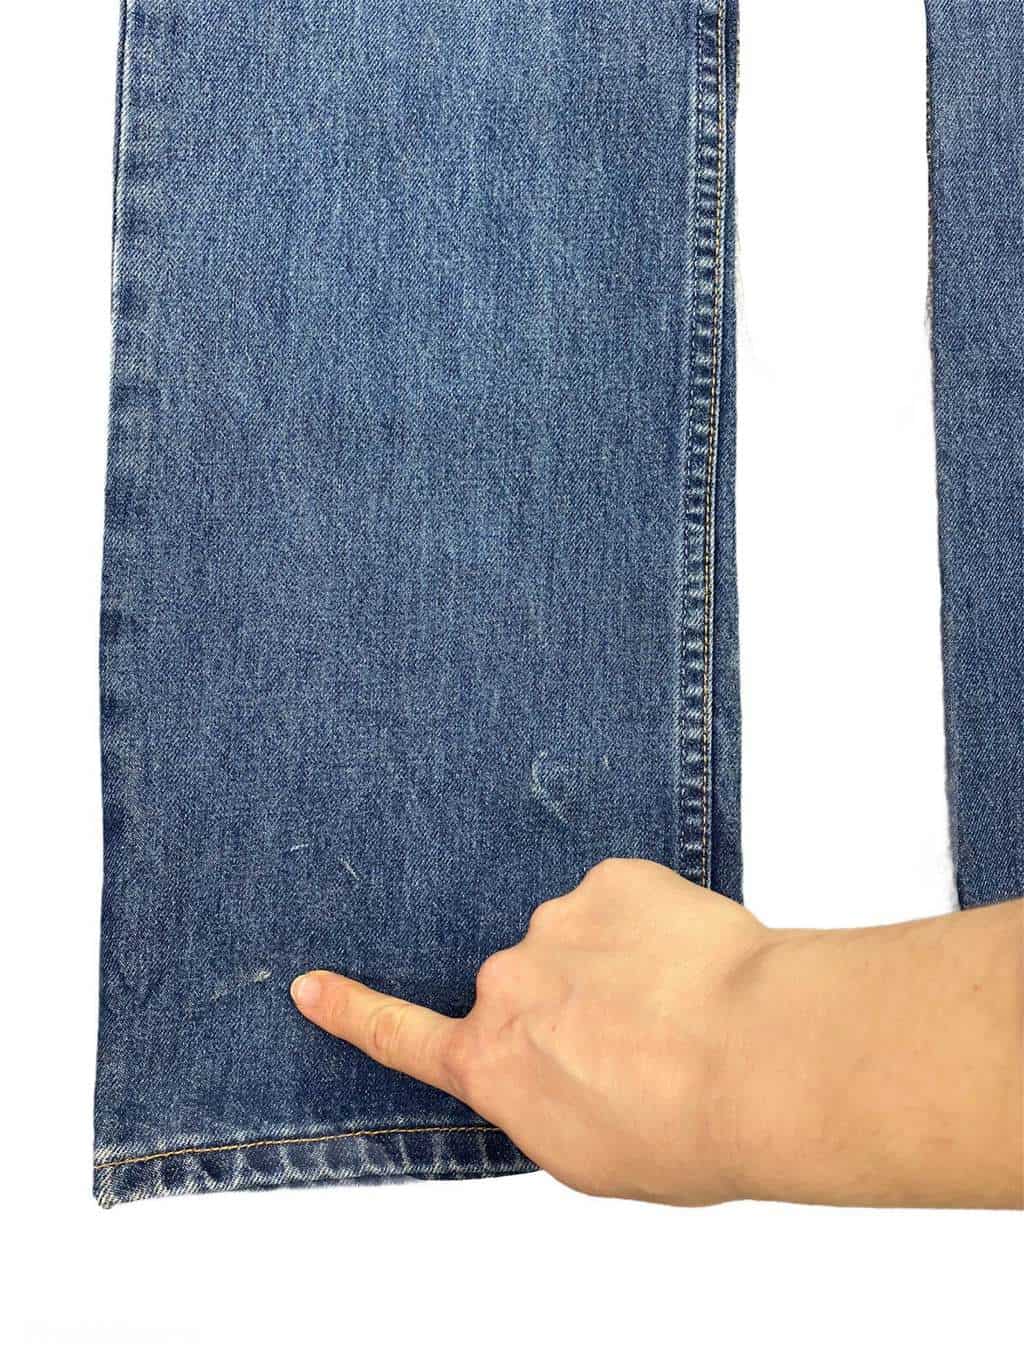 Vintage Levis 575 denim jeans in mid-blue wash, straight leg - W30 x L33 -  St Cyr Vintage